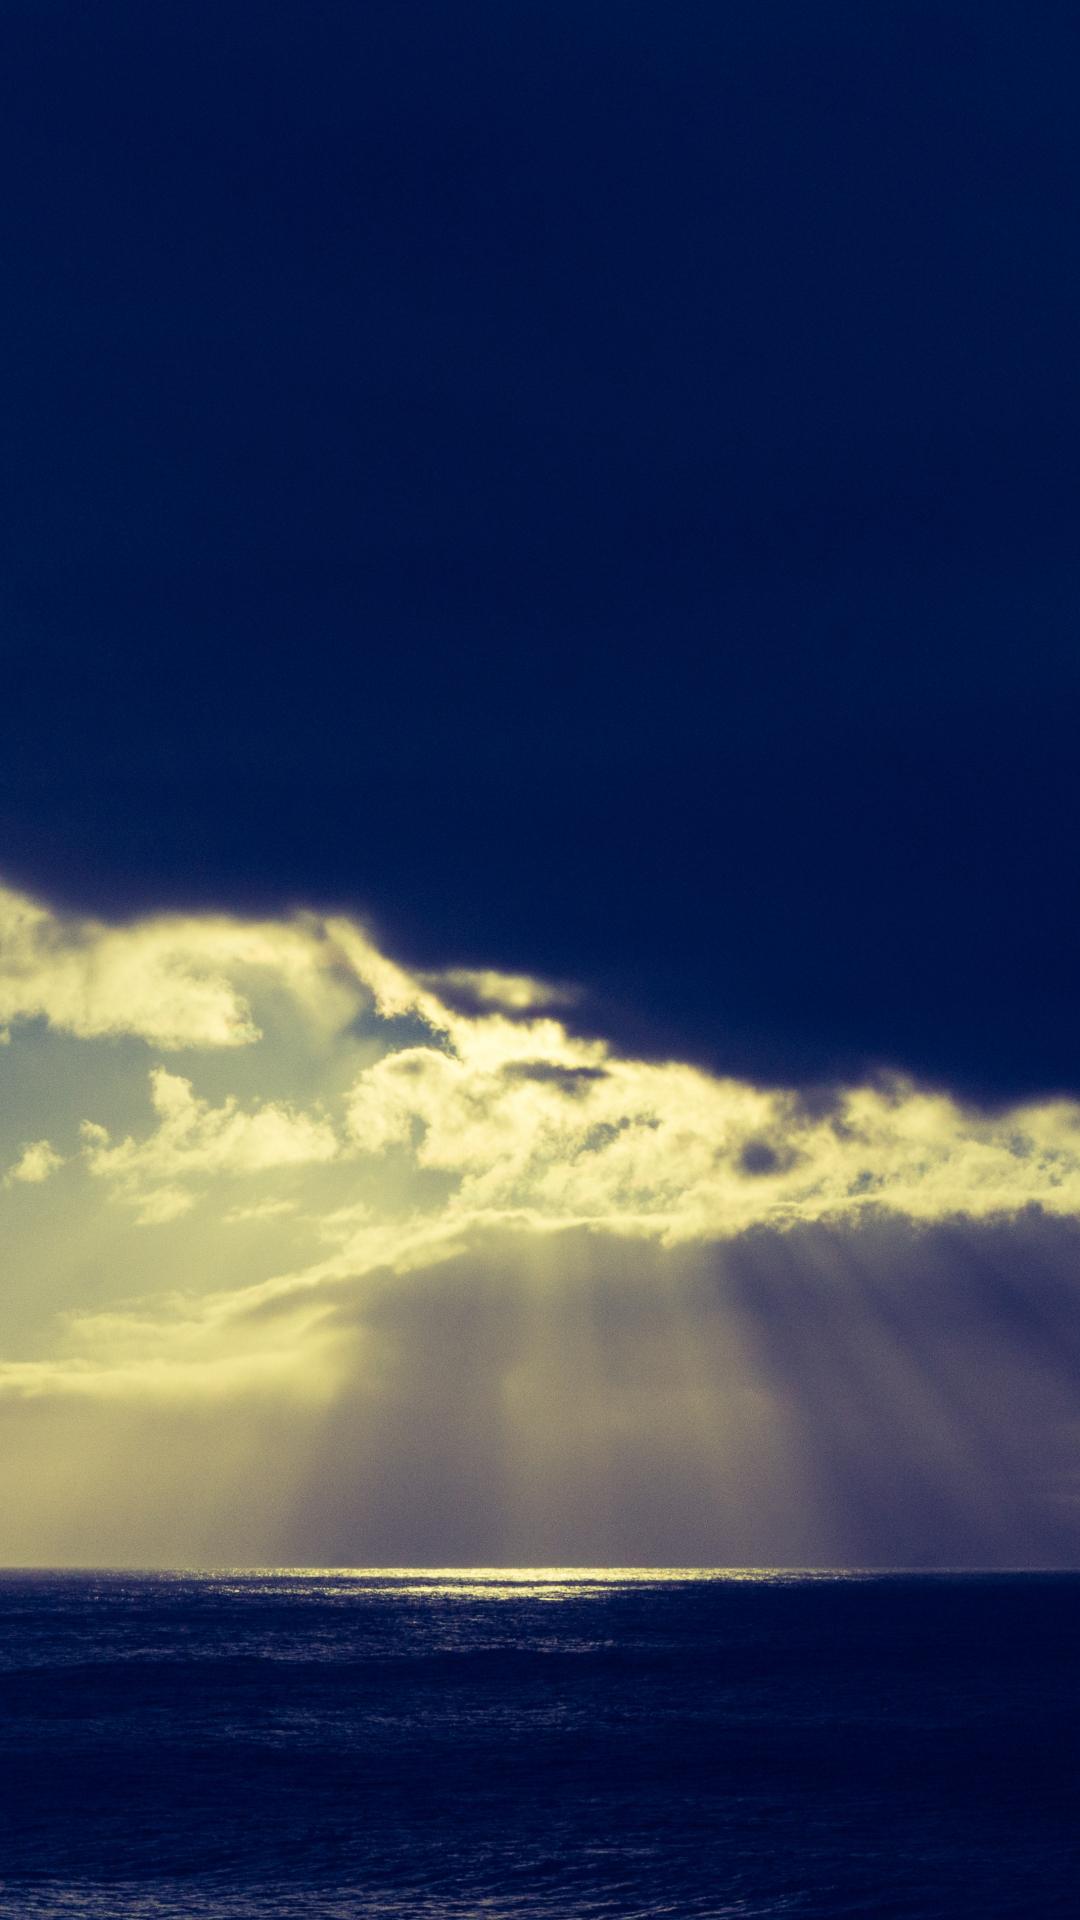 1080 x 1920 · jpeg - Cloud And Sun Ray iPhone Wallpaper | iDrop News